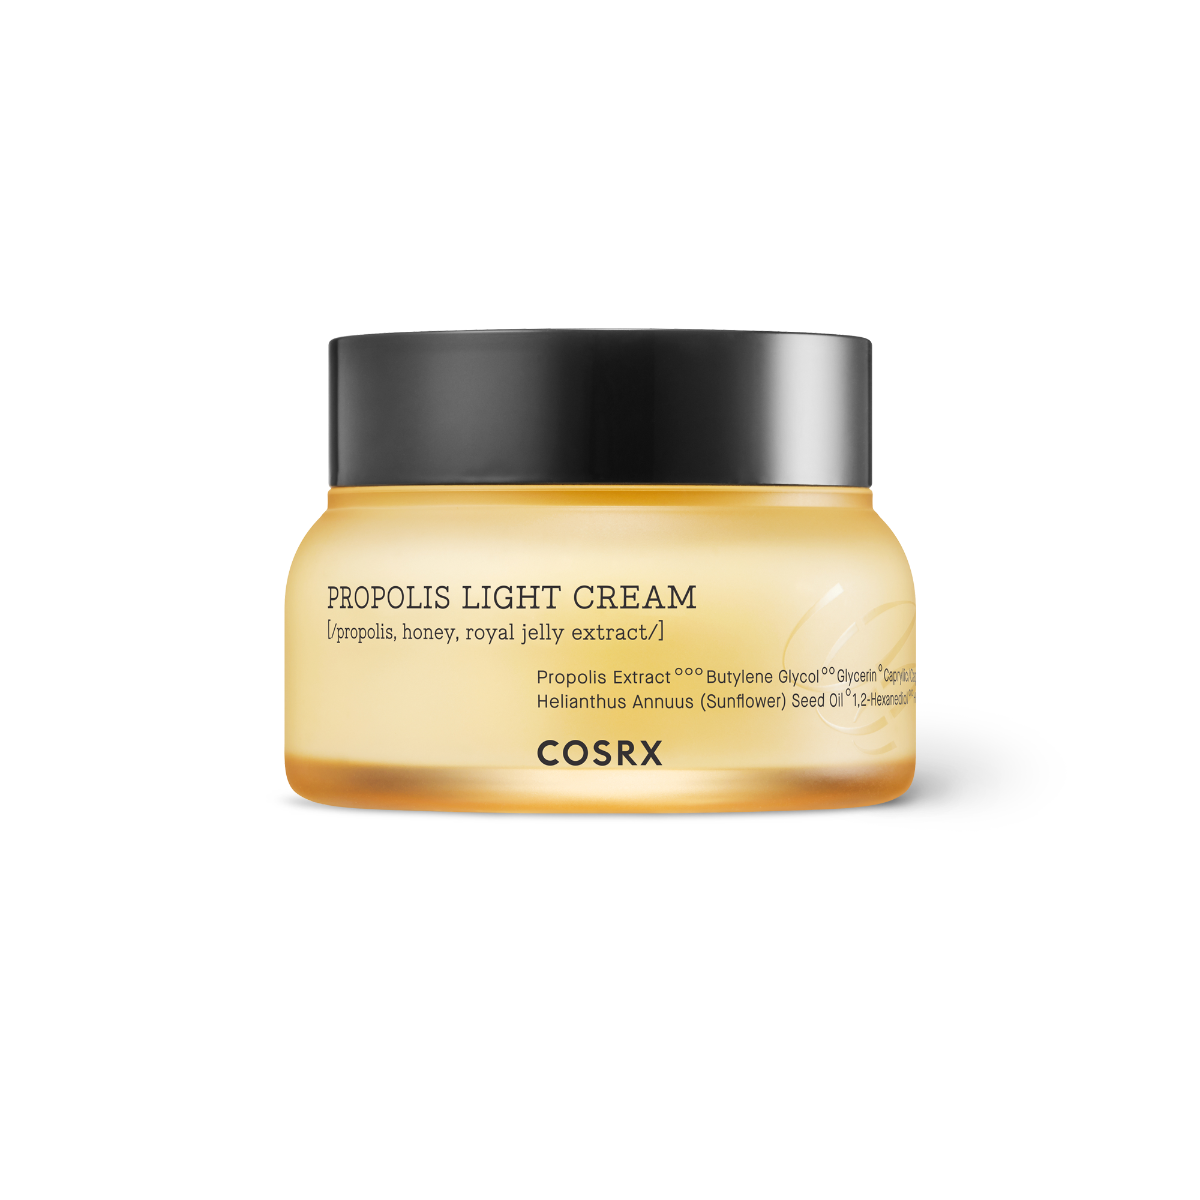 COSRX 7 Cream (Aloe/Snail 92/Hyaluronic/Hydrium /Soothing Gel/Propolis/Centella)